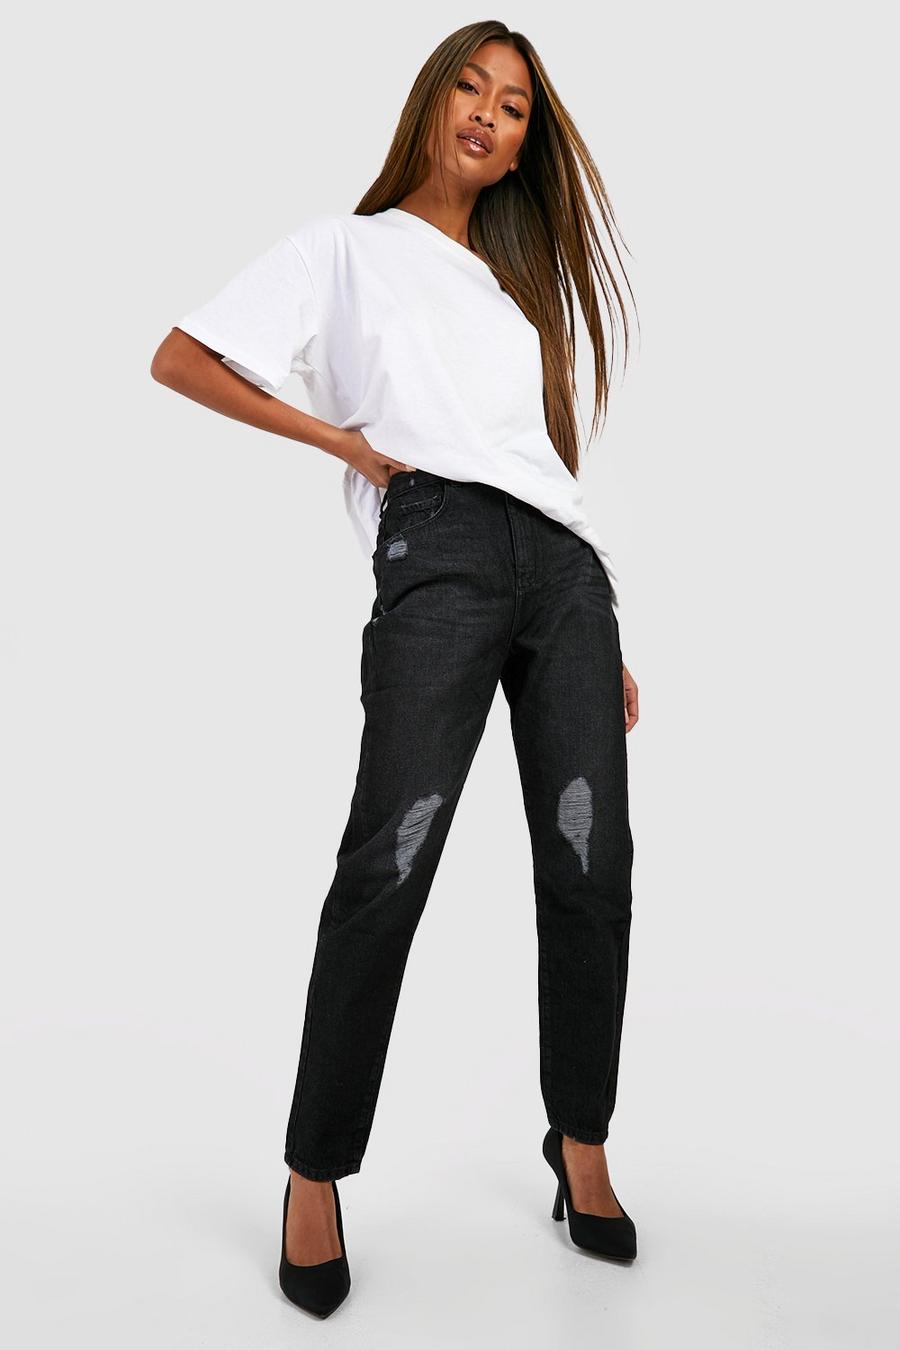 https://media.boohoo.com/i/boohoo/fzz12913_black_xl/female-black-basic-high-waisted-slashed-knee-mom-jeans/?w=900&qlt=default&fmt.jp2.qlt=70&fmt=auto&sm=fit